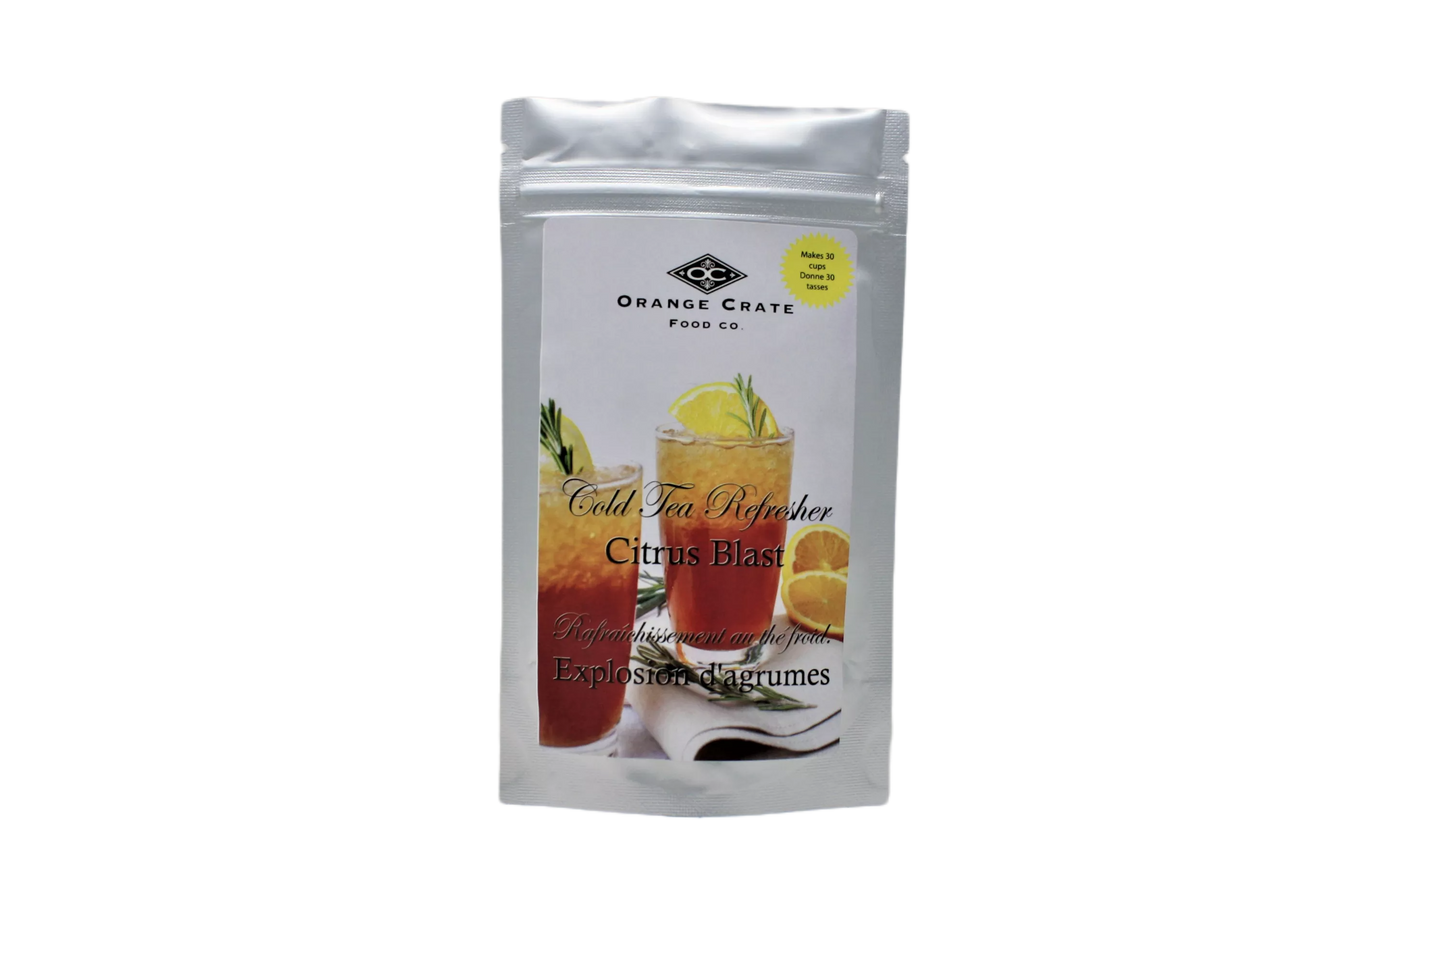 Orange Crate Food Company - Cold Tea Refresher Citrus Blast